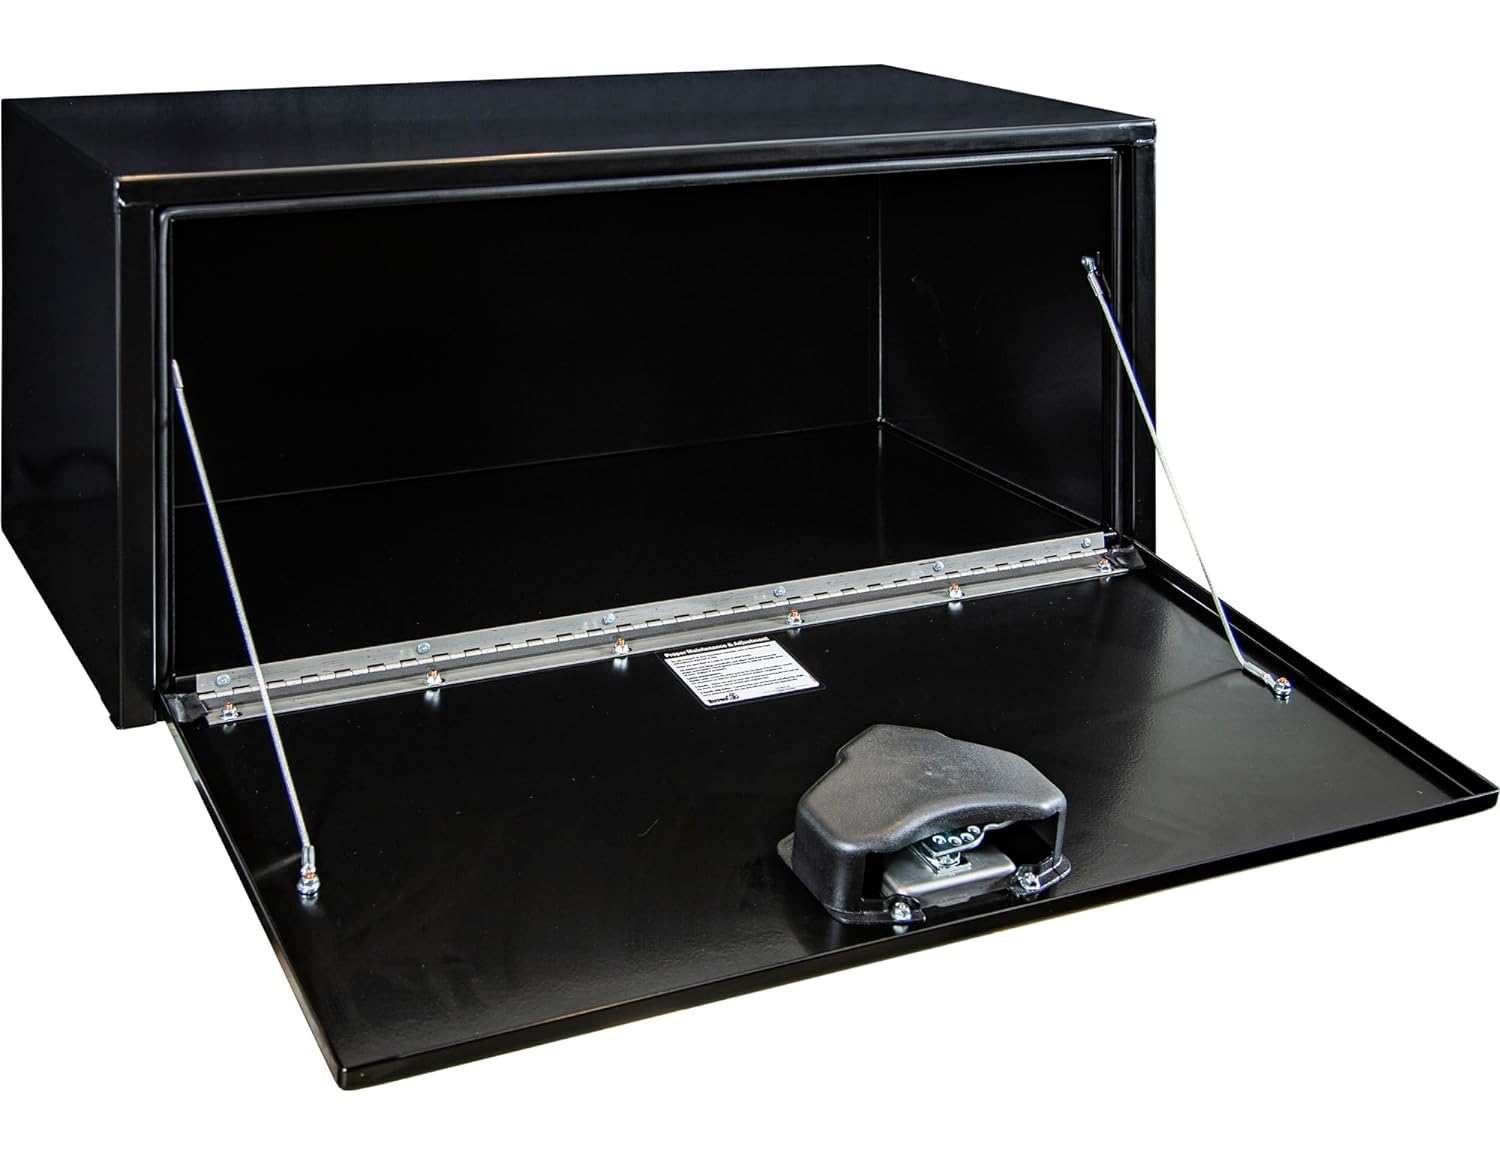 Buyers Products 1702305 Black Steel Underbody Truck Box W/ Lockable T-Handle Latch - $165